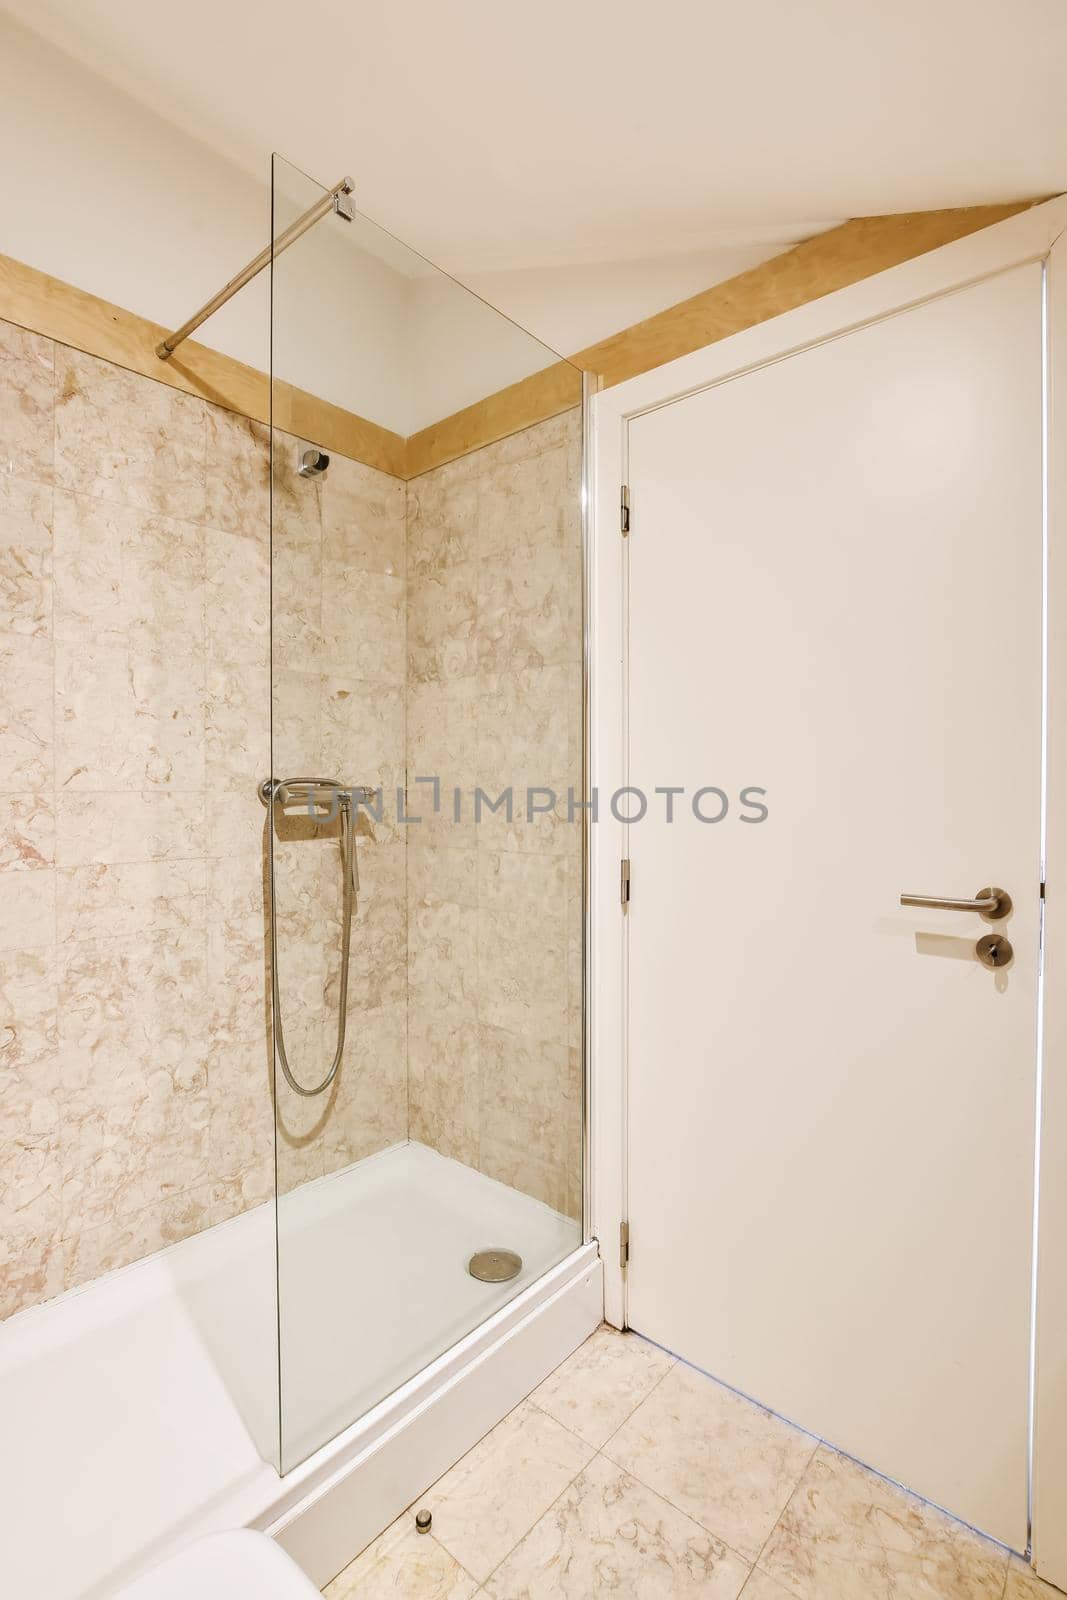 Luxury bathroom design with beige marble and tiled floor